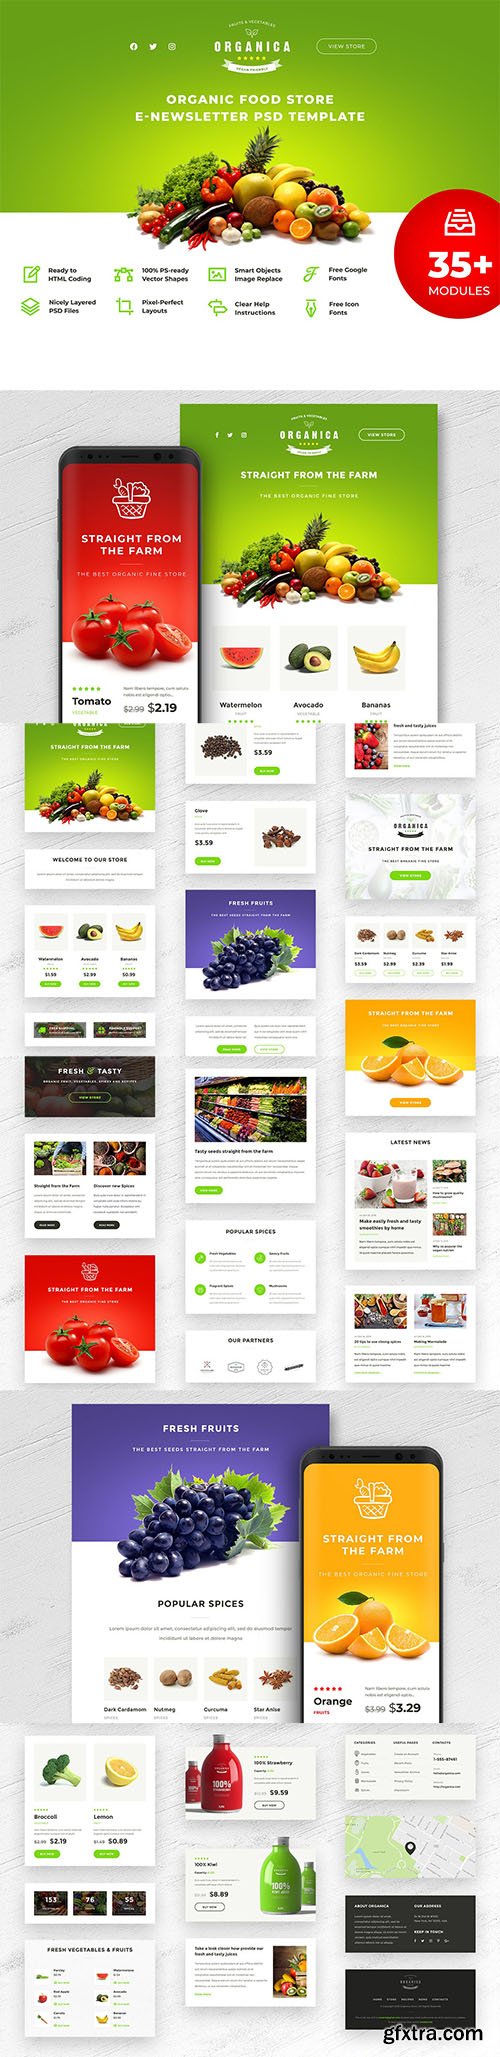 Organica - Food Store E-newsletter PSD Template